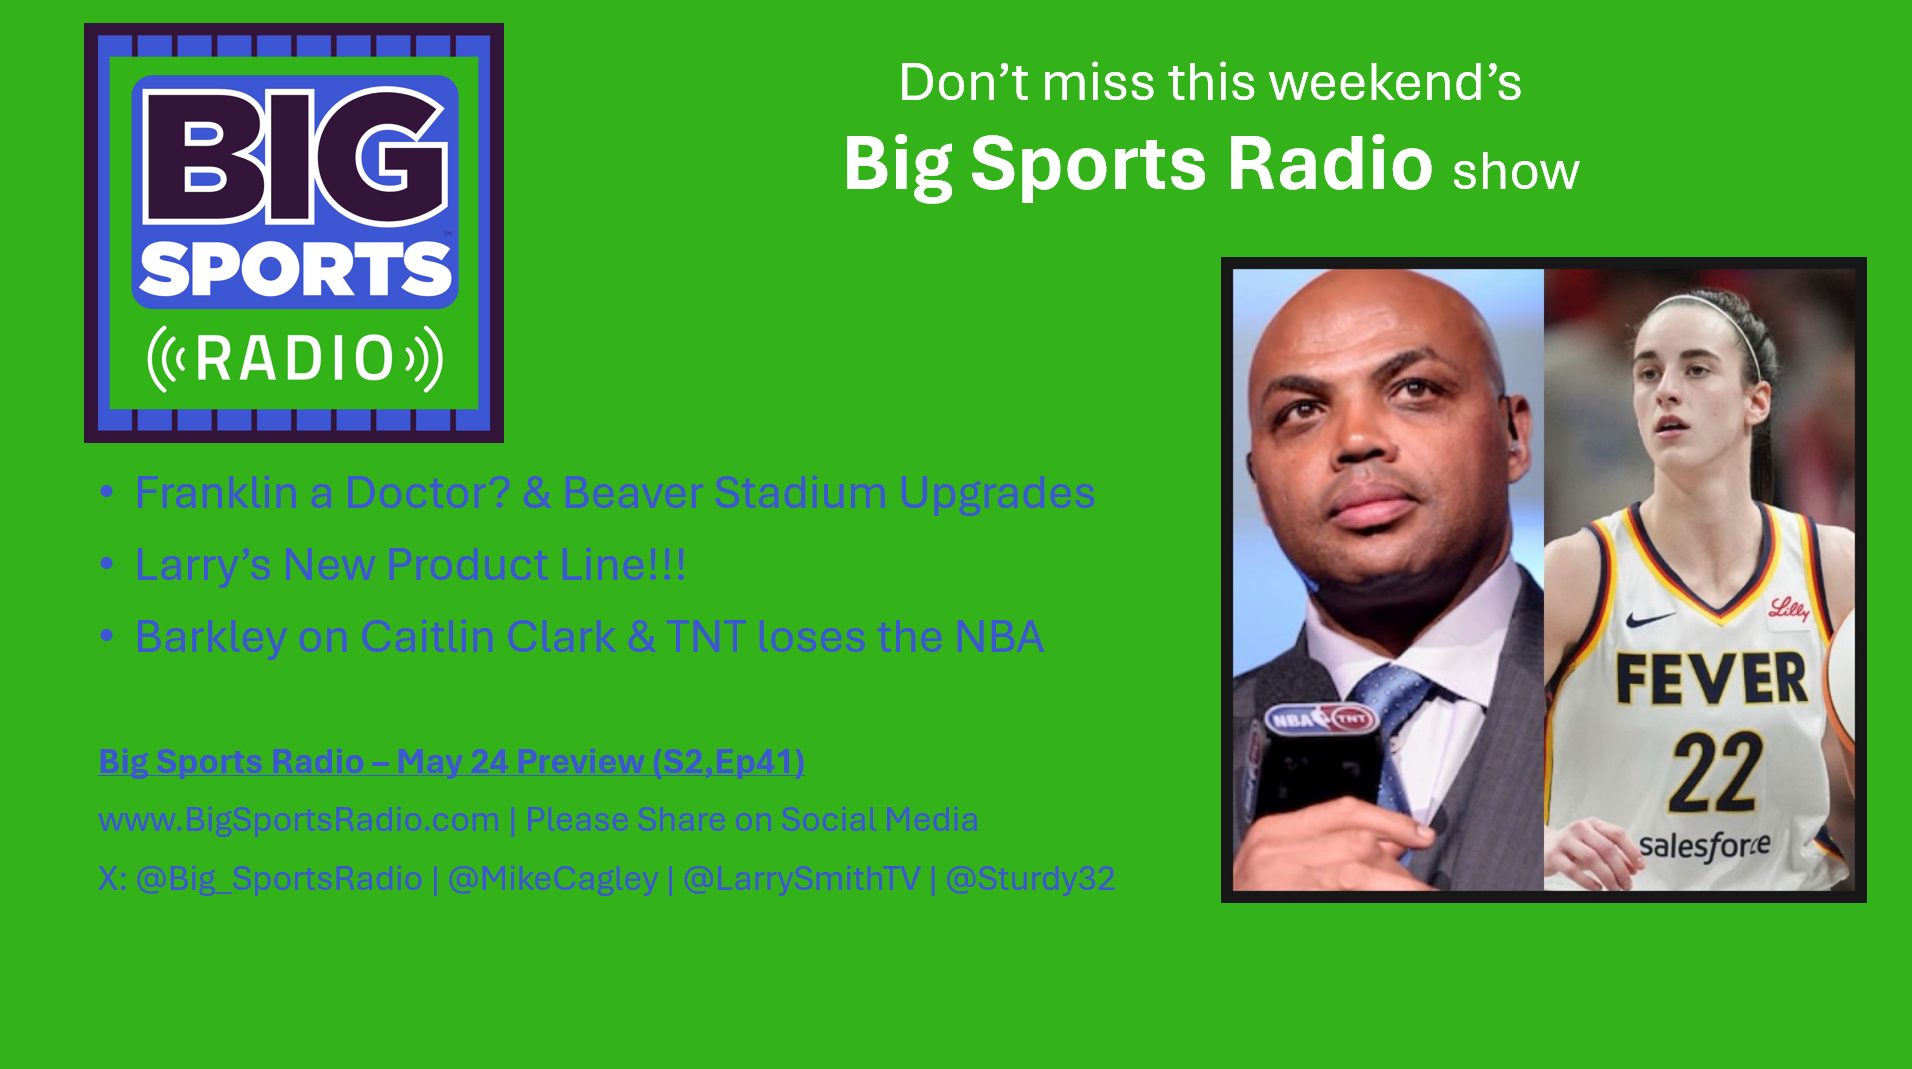 Big Sports Radio - May 24 Preview #1